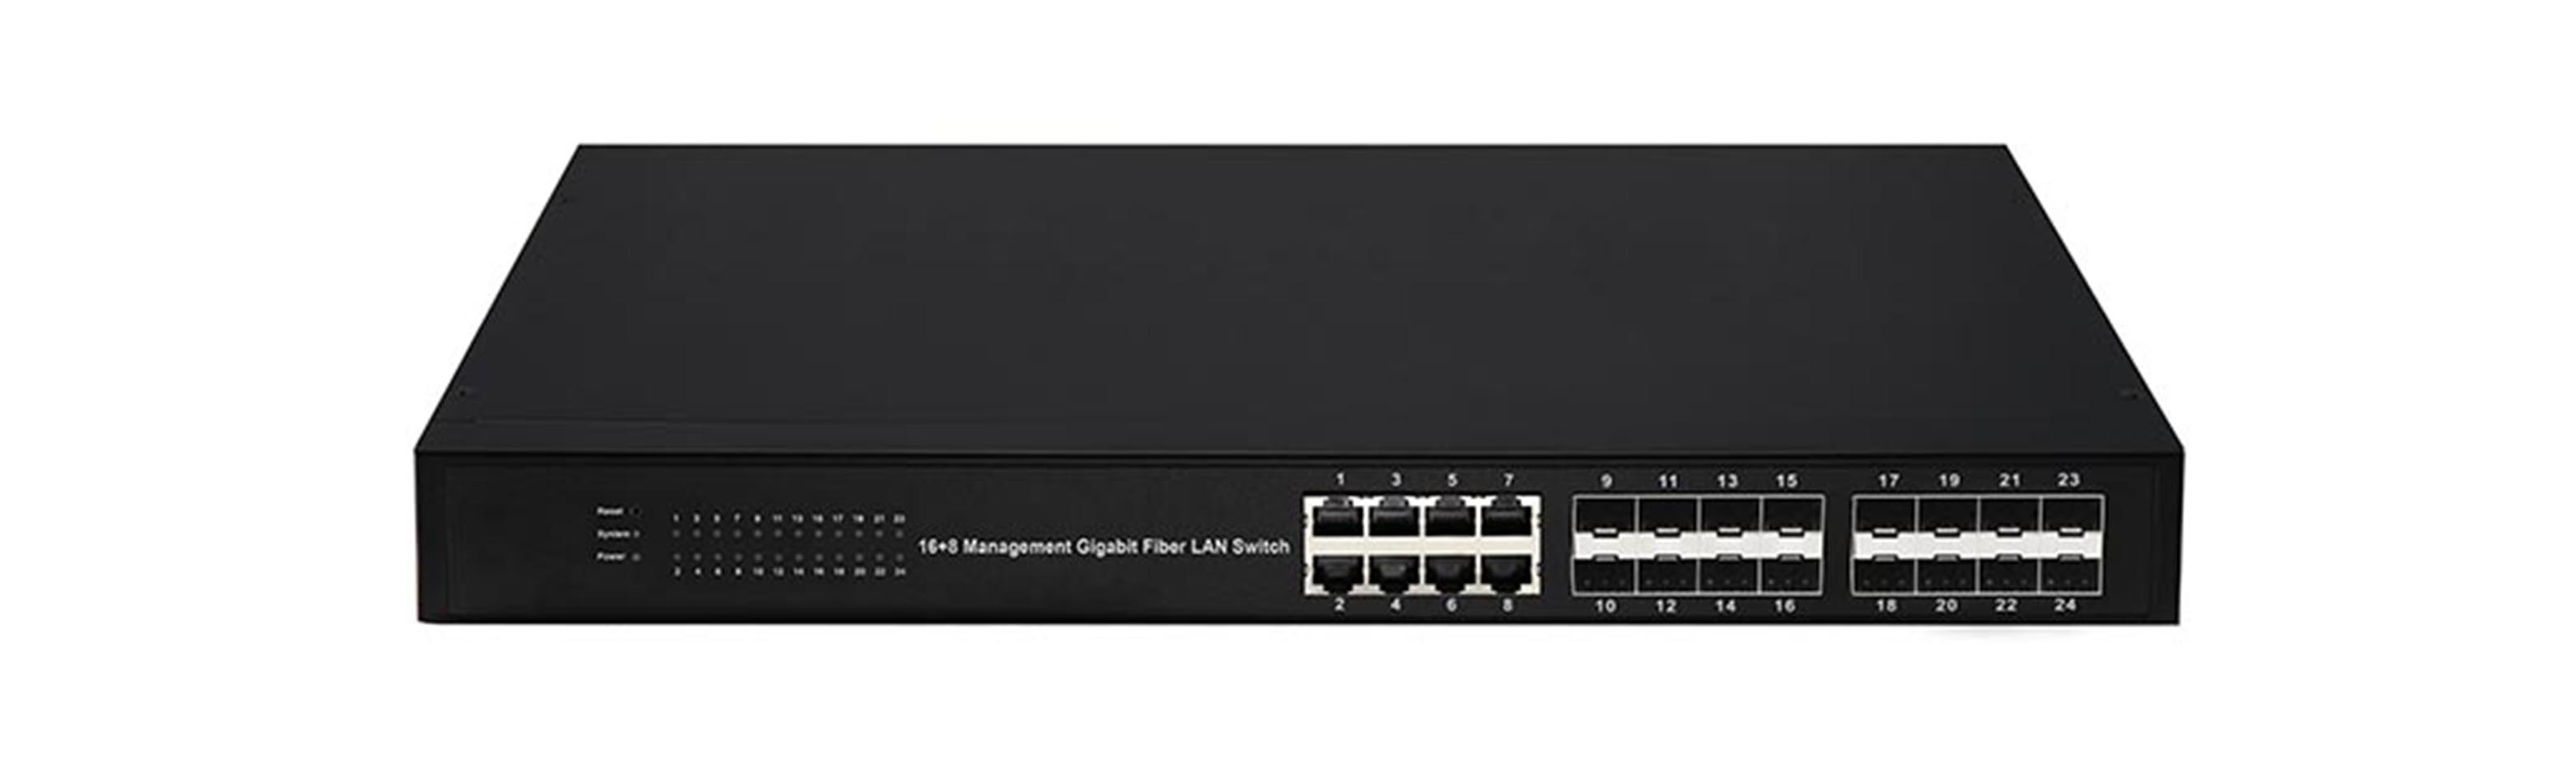 8240-130 MiLAN MIL-SM2401M Managed 24 Port 10/100 Ethernet Switch P/N 